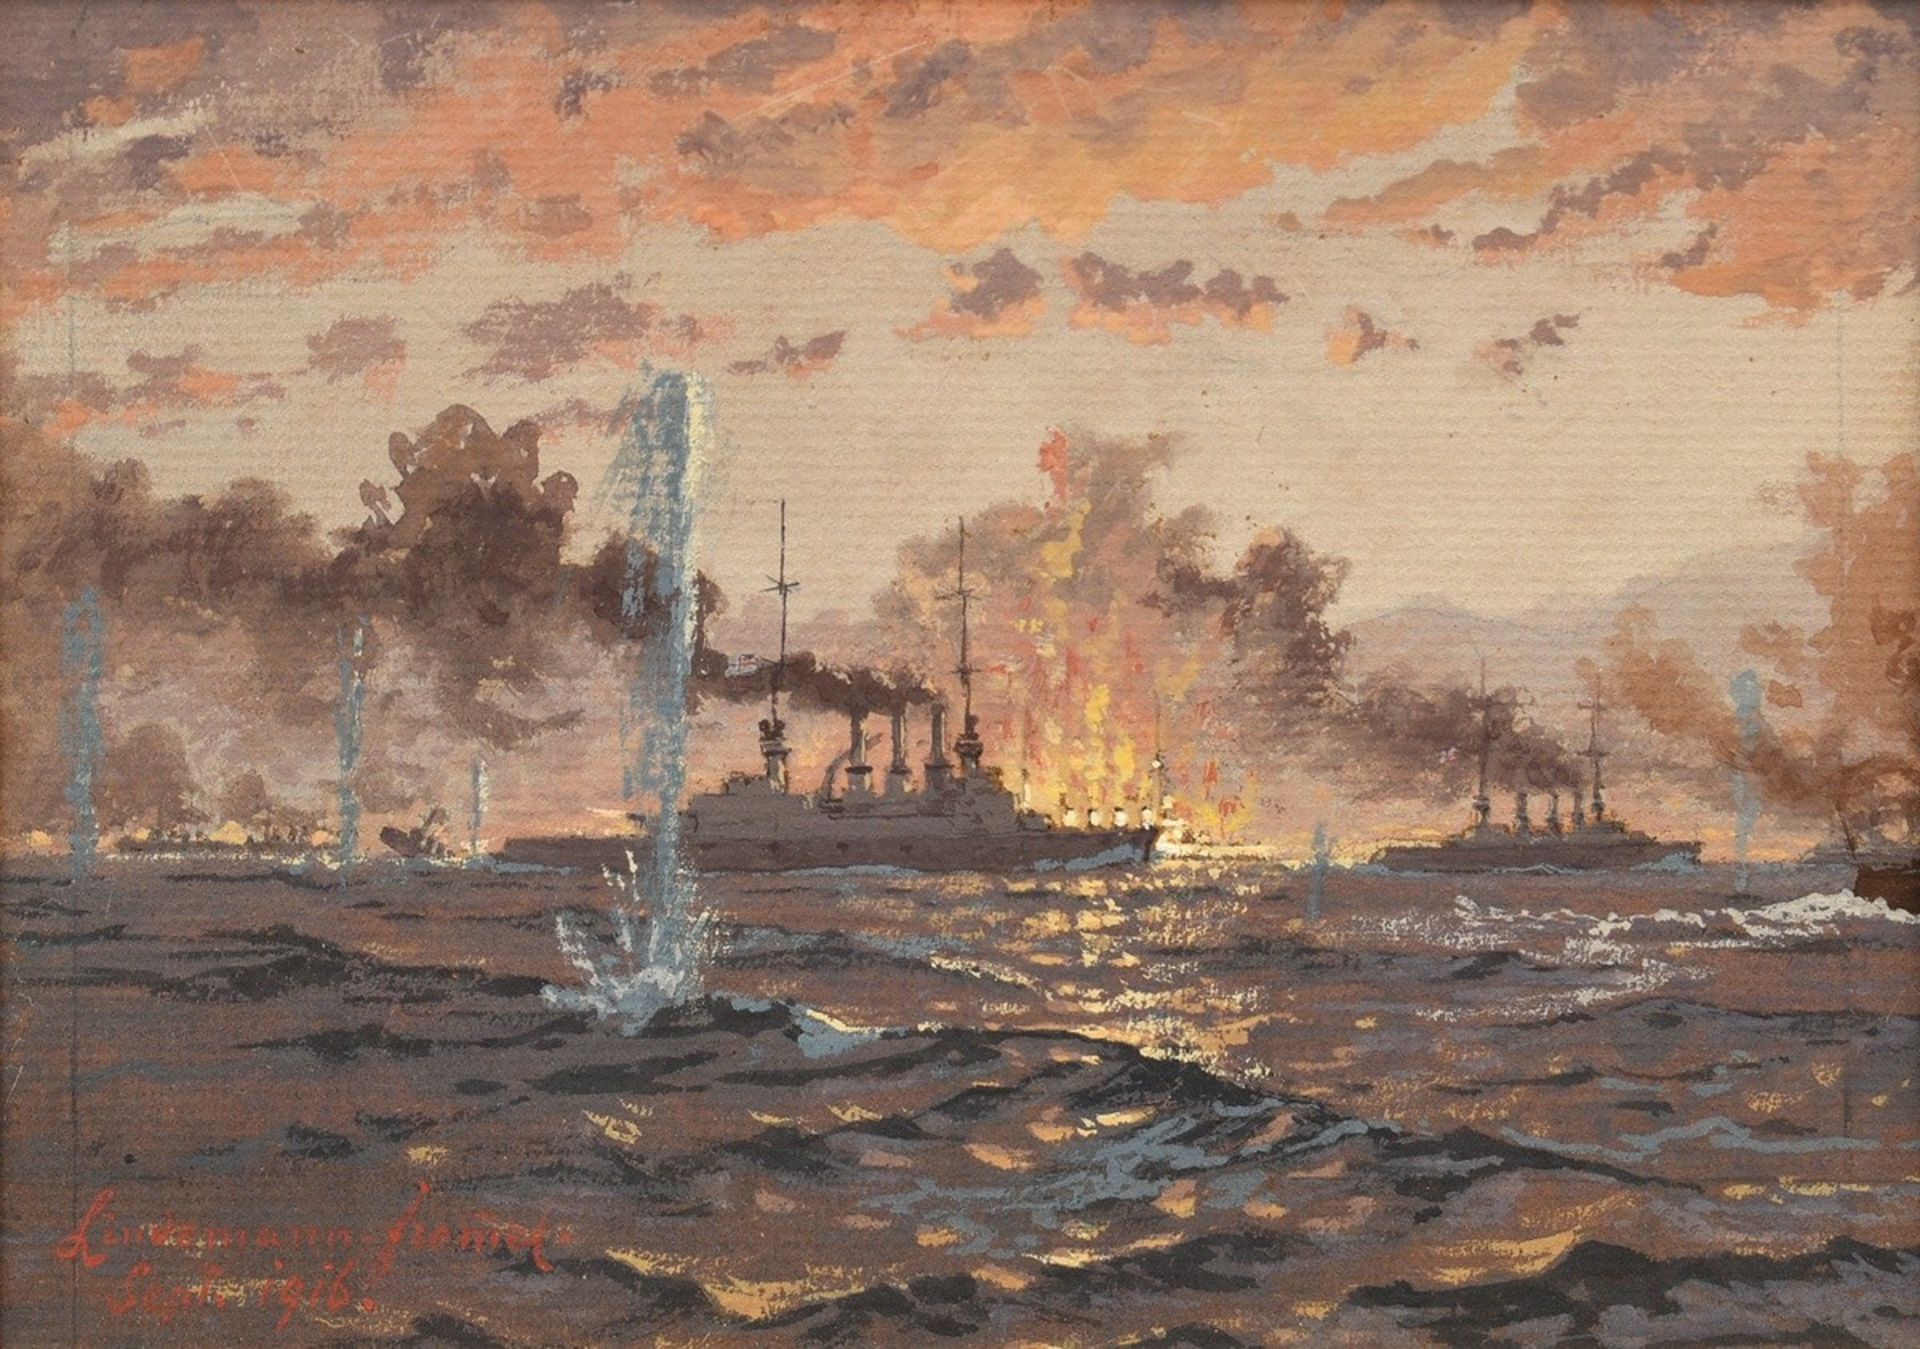 Lindemann-Fromel, Manfred Alfred (1852-1939) "Battle of the Skagerrak" 1916 (probably ship 'Schlesi